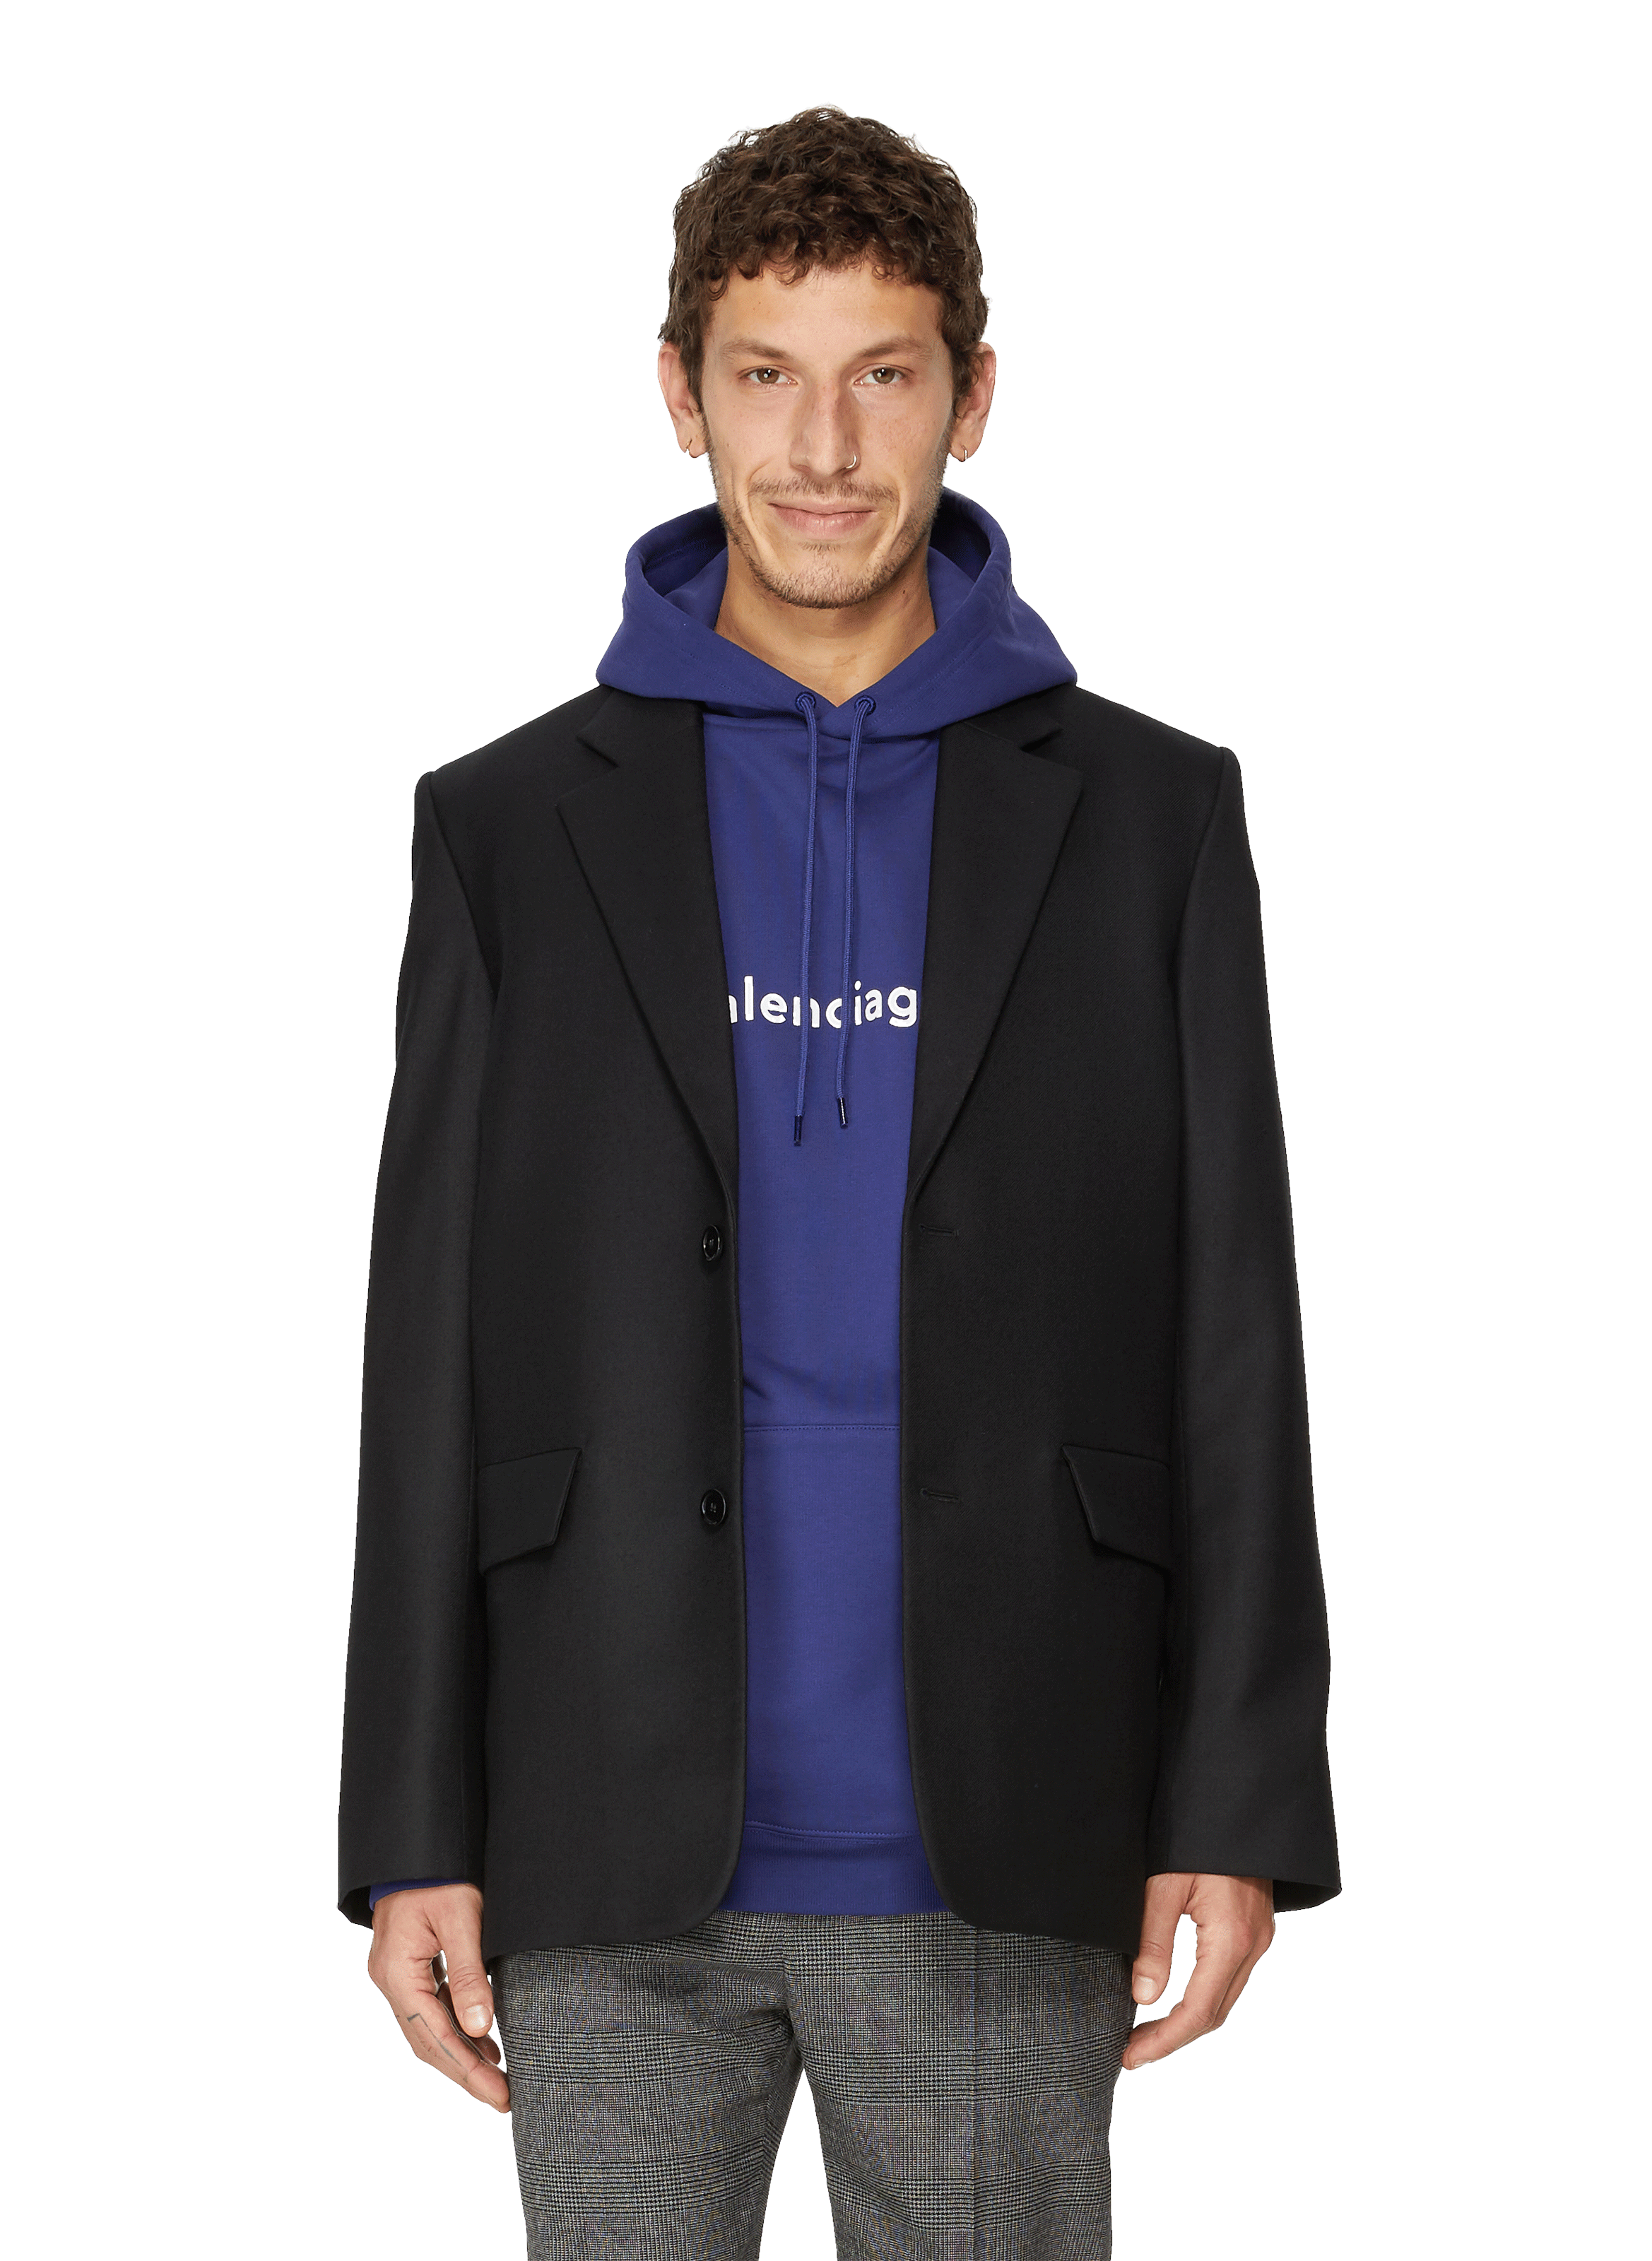 Balenciaga Suits  Blazers for Men for sale  eBay